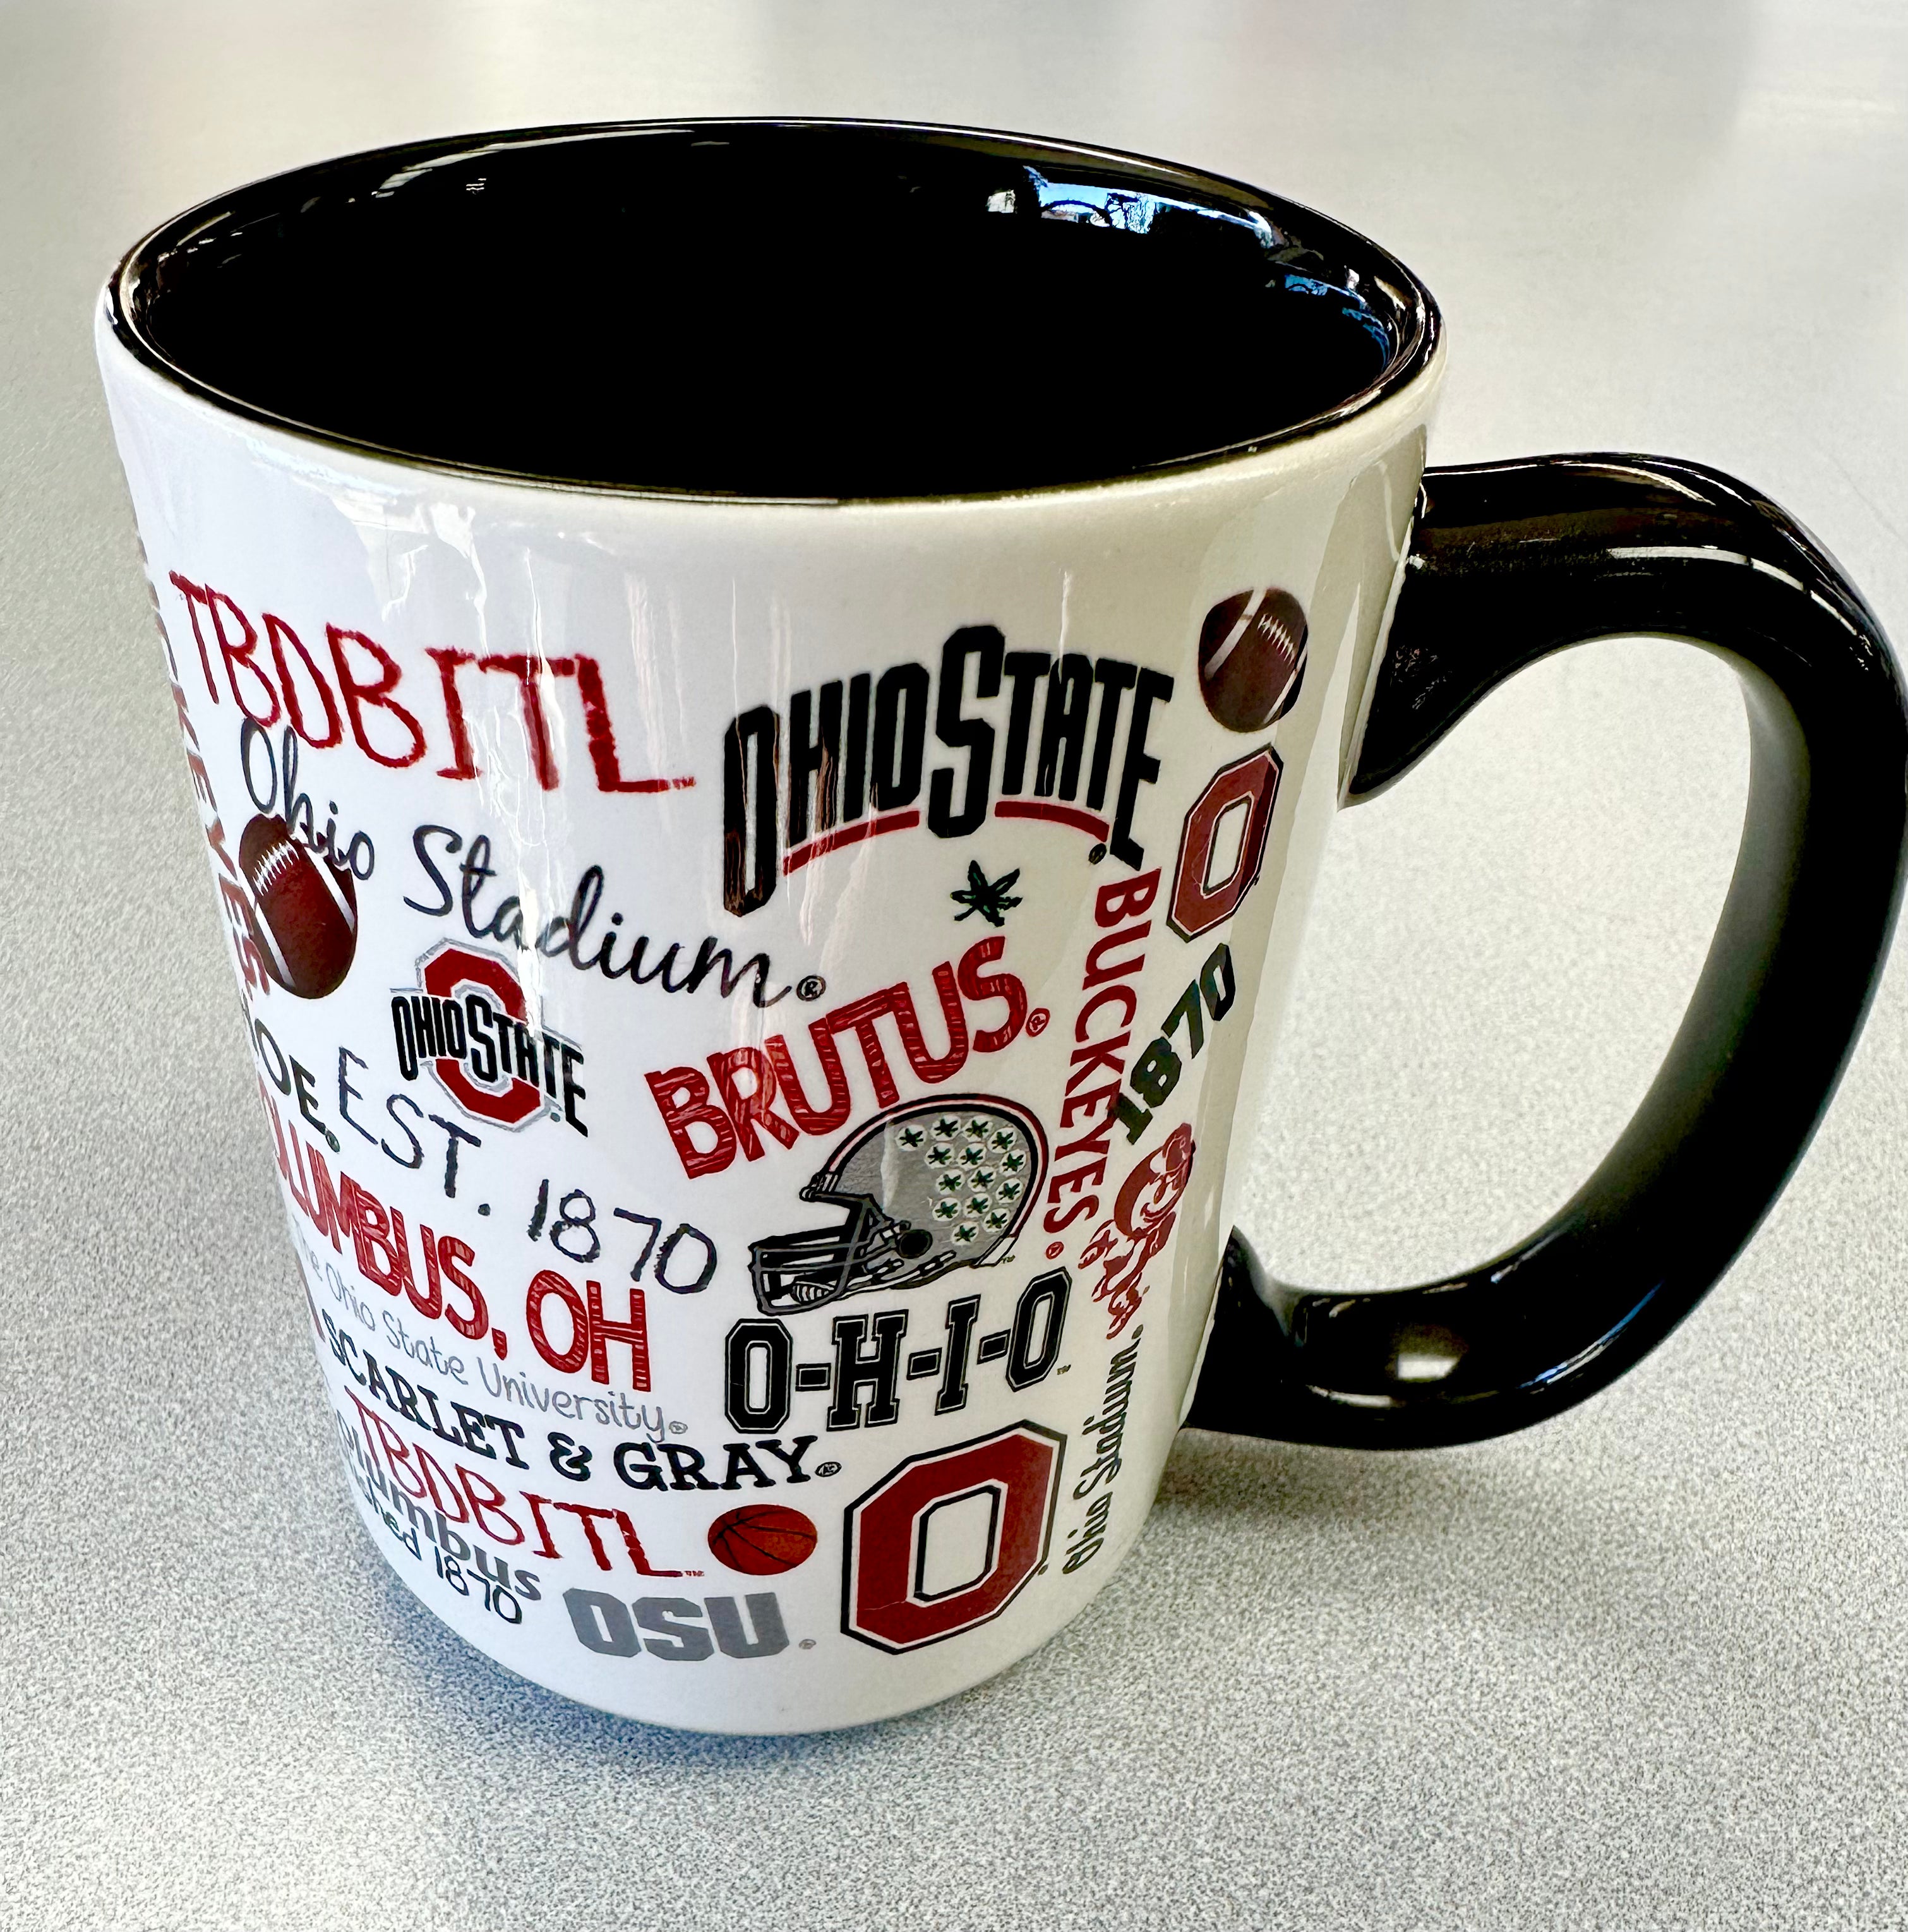 Ohio State 16oz. Soft Touch Ceramic Travel Mug - Primary Logo